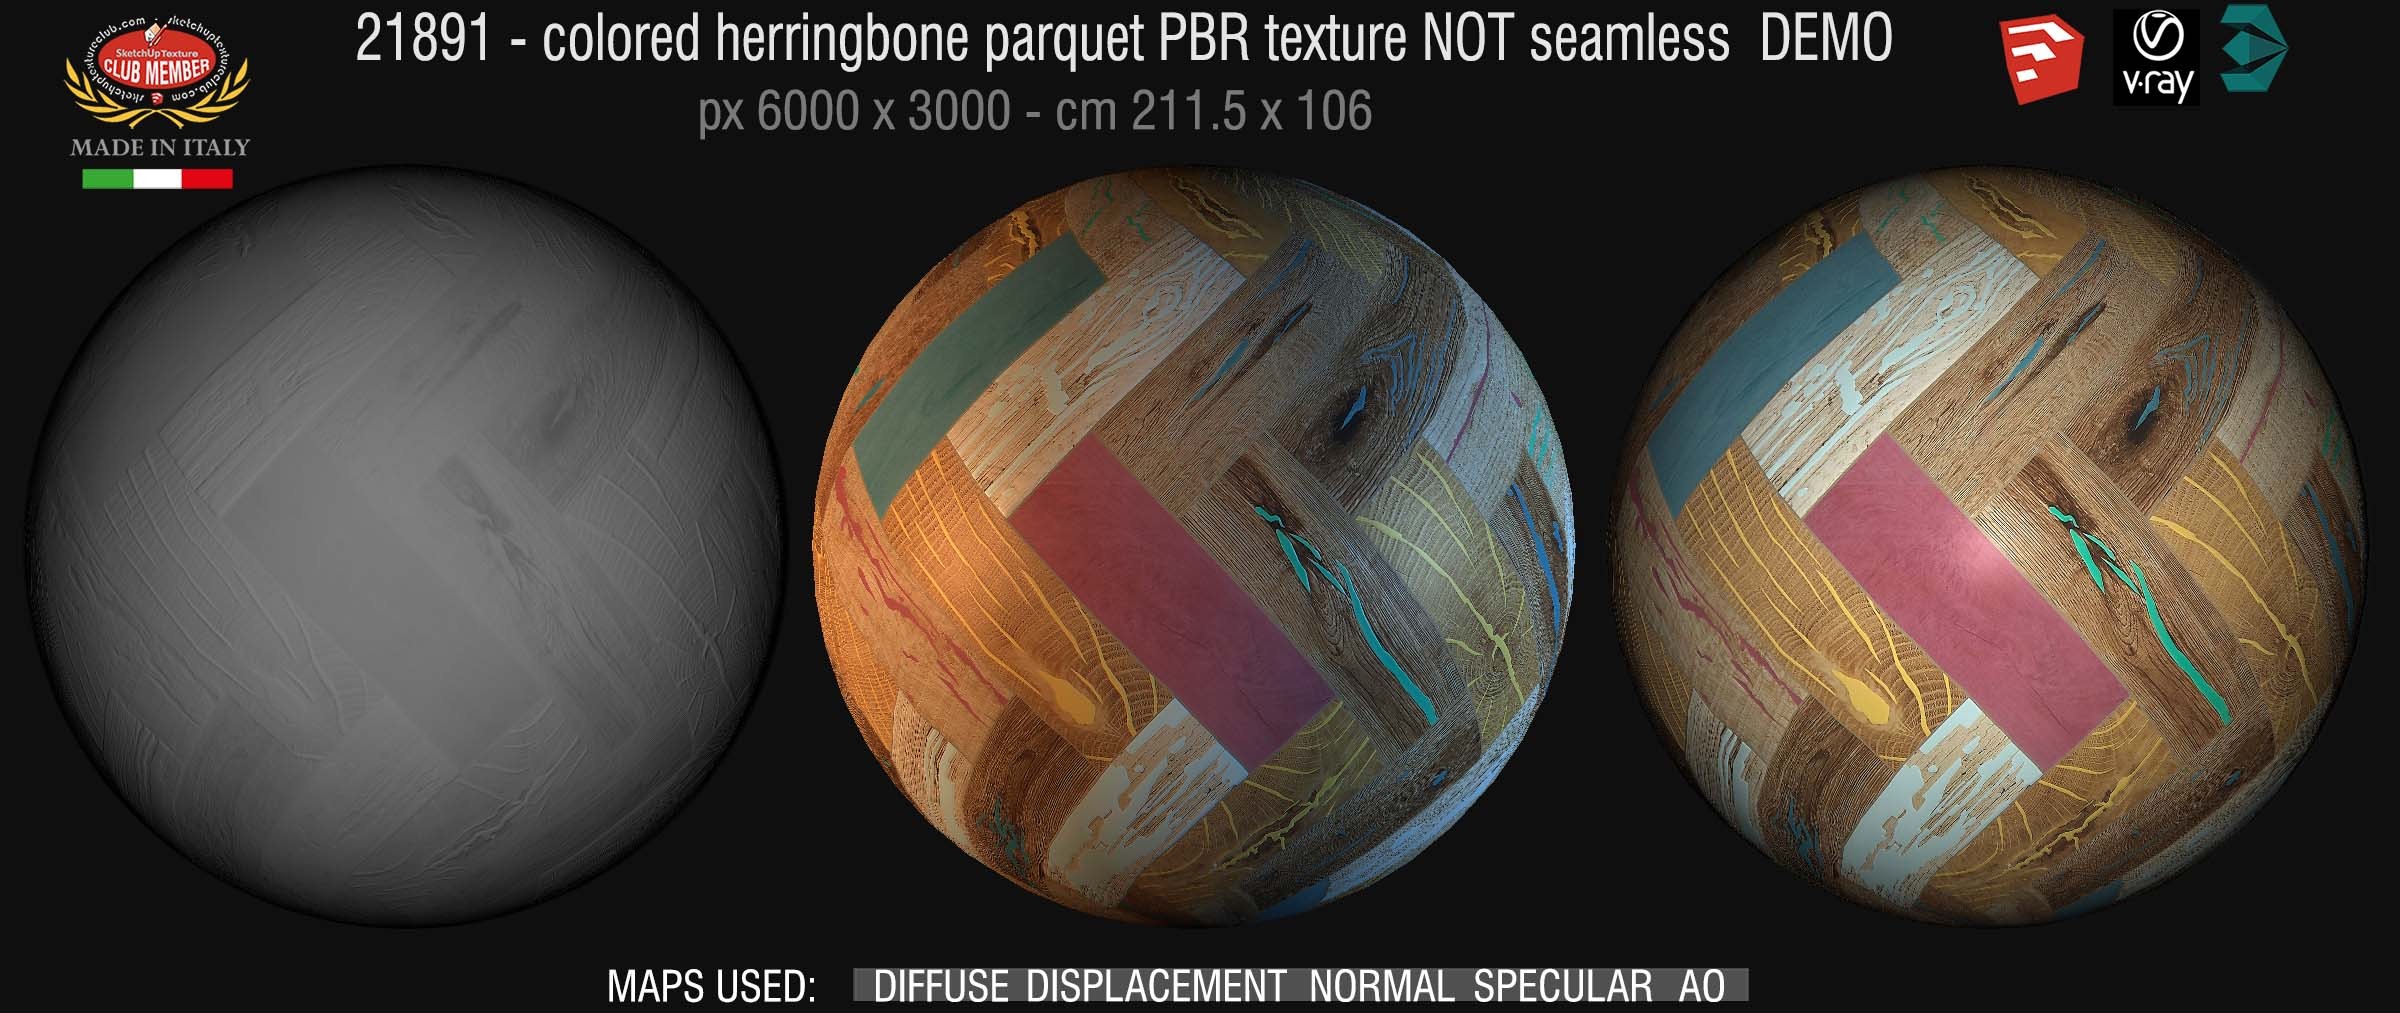 21891 colored herringbone parquet PBR texture NOT seamless DEMO